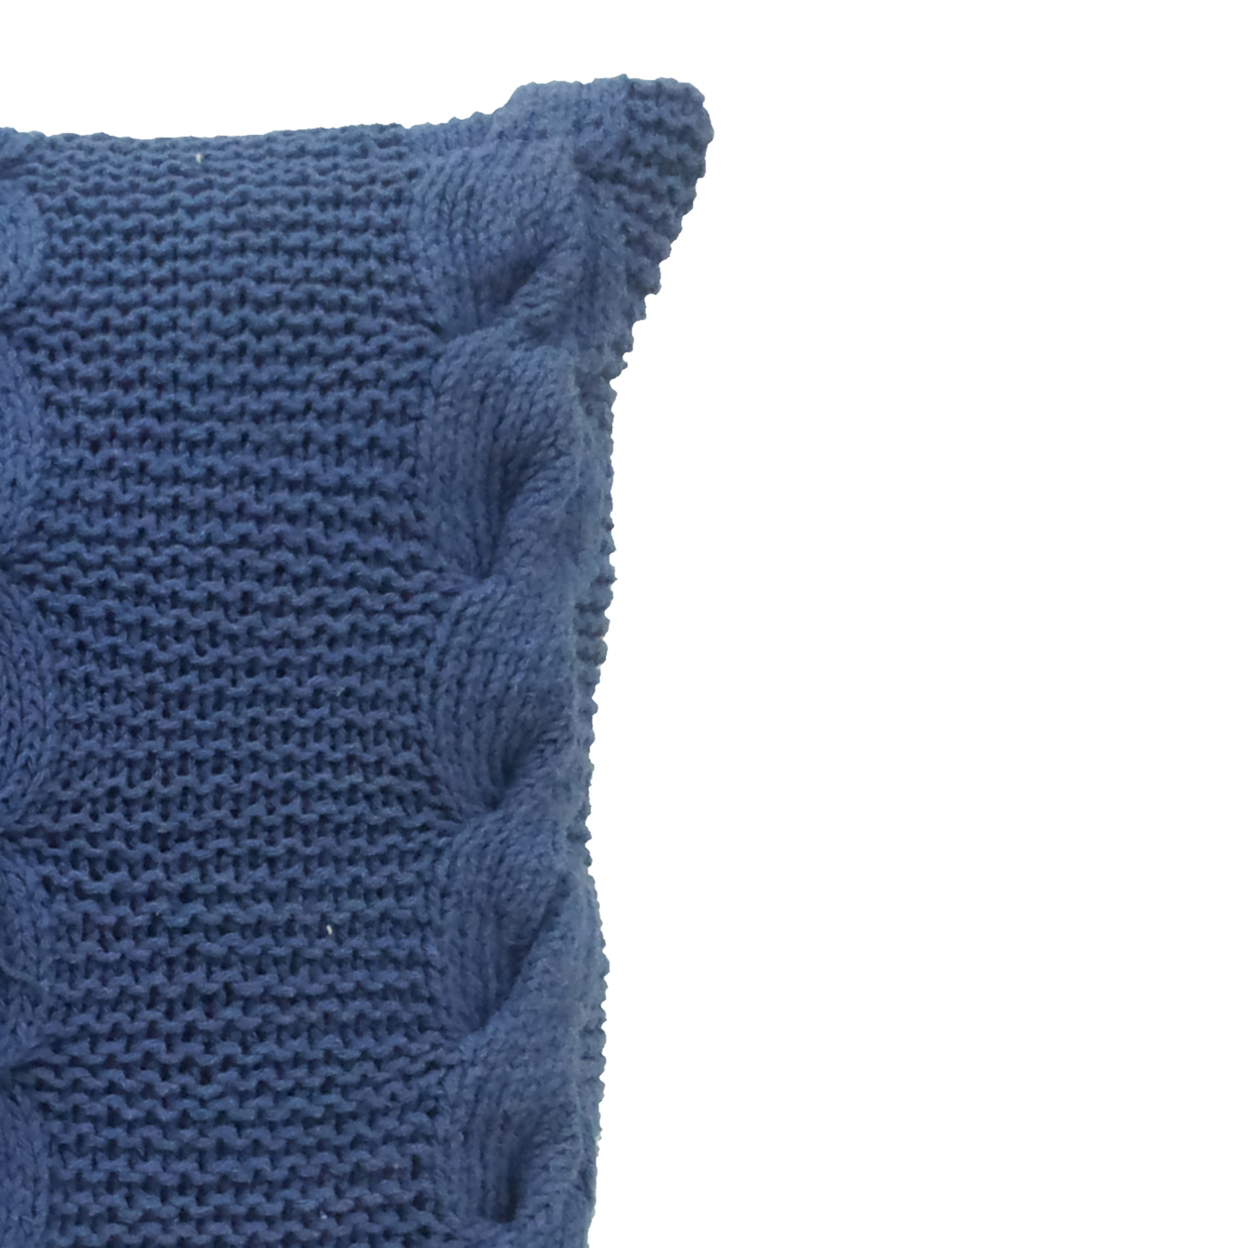 18 X 18 Inch Decorative Cable Knit Hand Woven Cotton Pillow, Set Of 2, Blue- Saltoro Sherpi